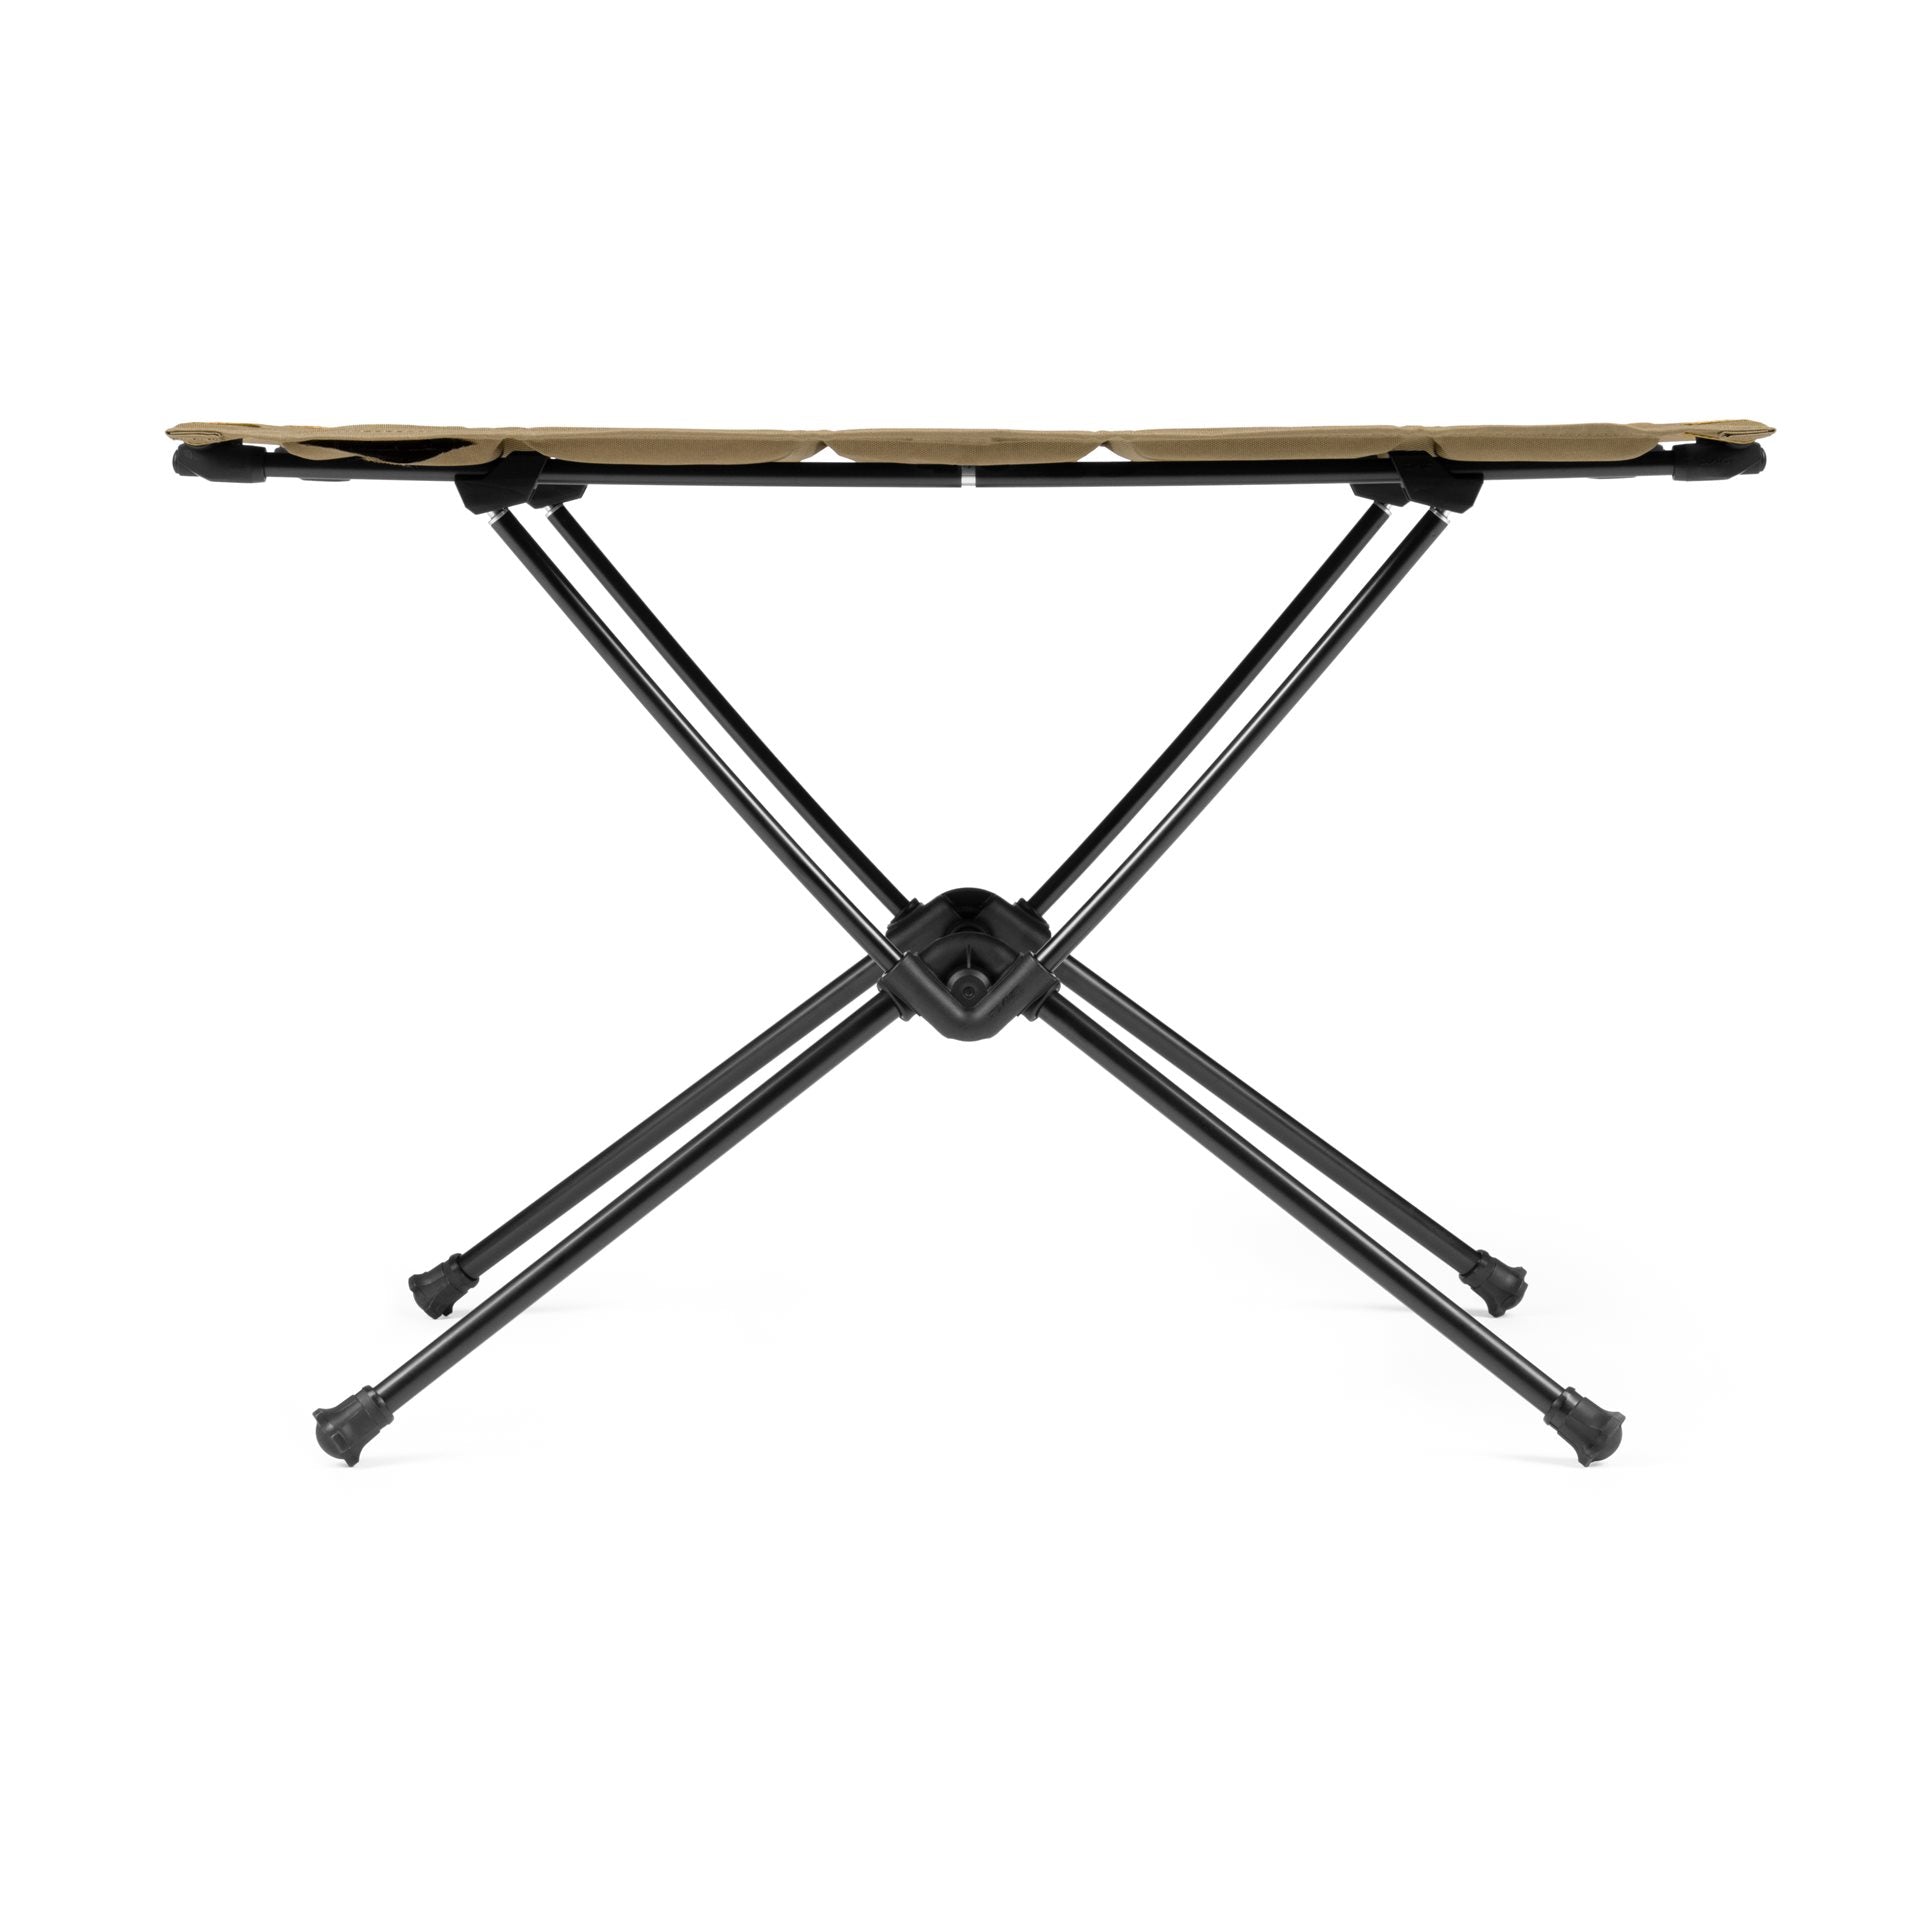 Helinox Table One  Hard Top - Kampeertafel Medium- Coyote Tan Campingtafel - Reisartikelen-nl